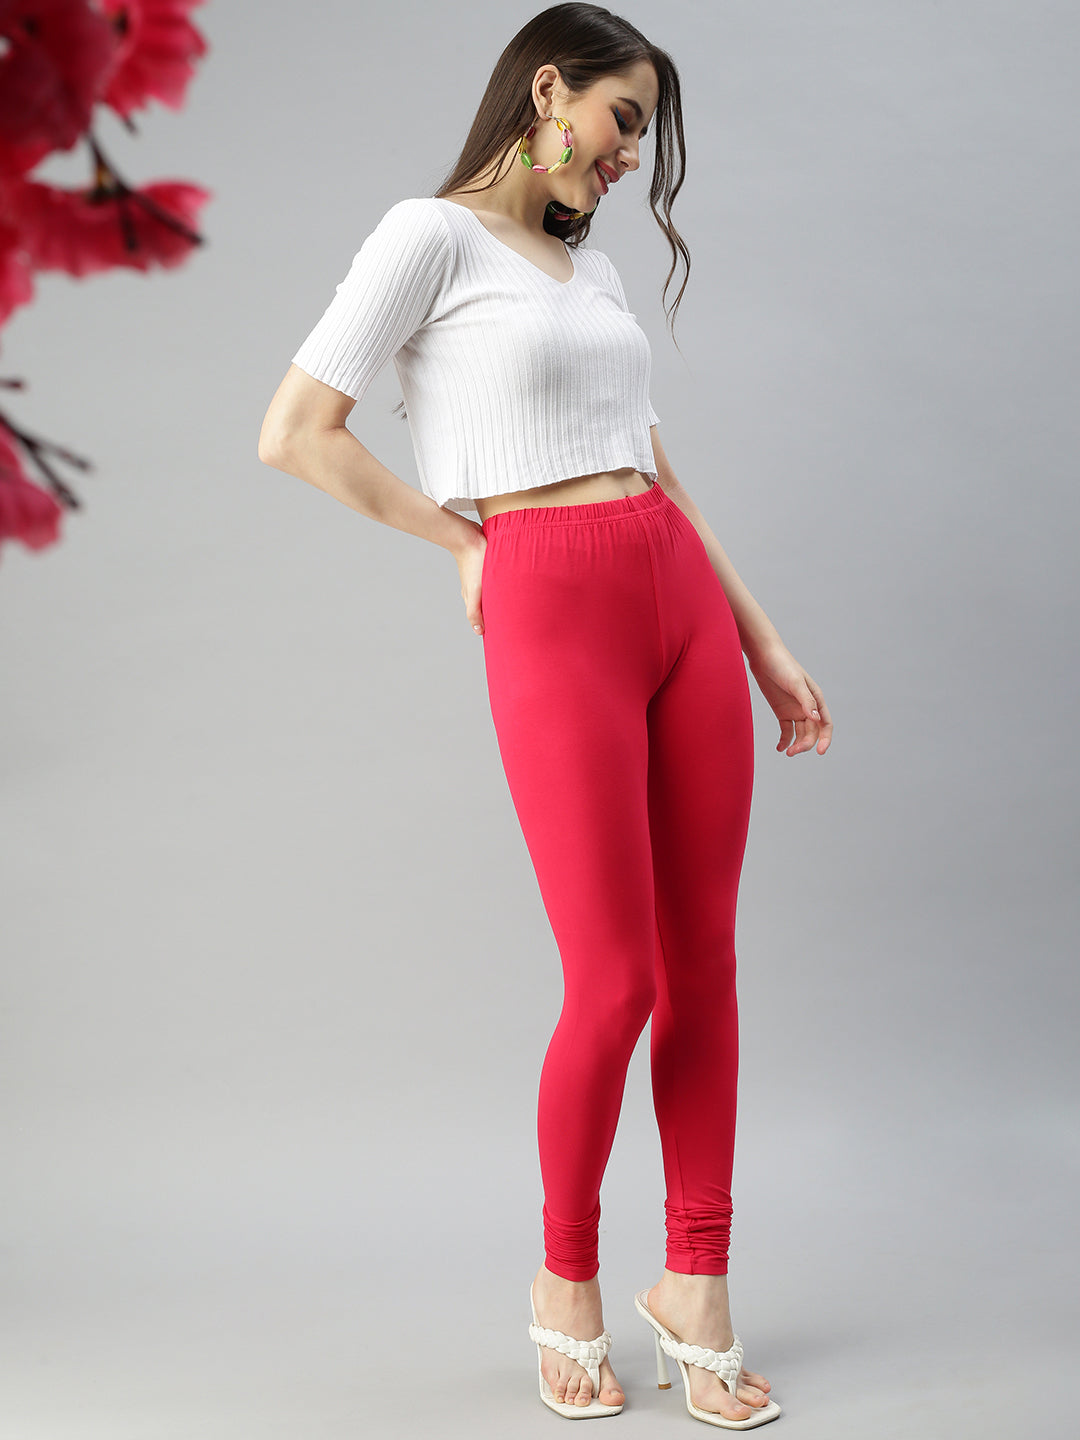 Buy Ryder Act women allover printed leggings white pink gold Online |  Brands For Less